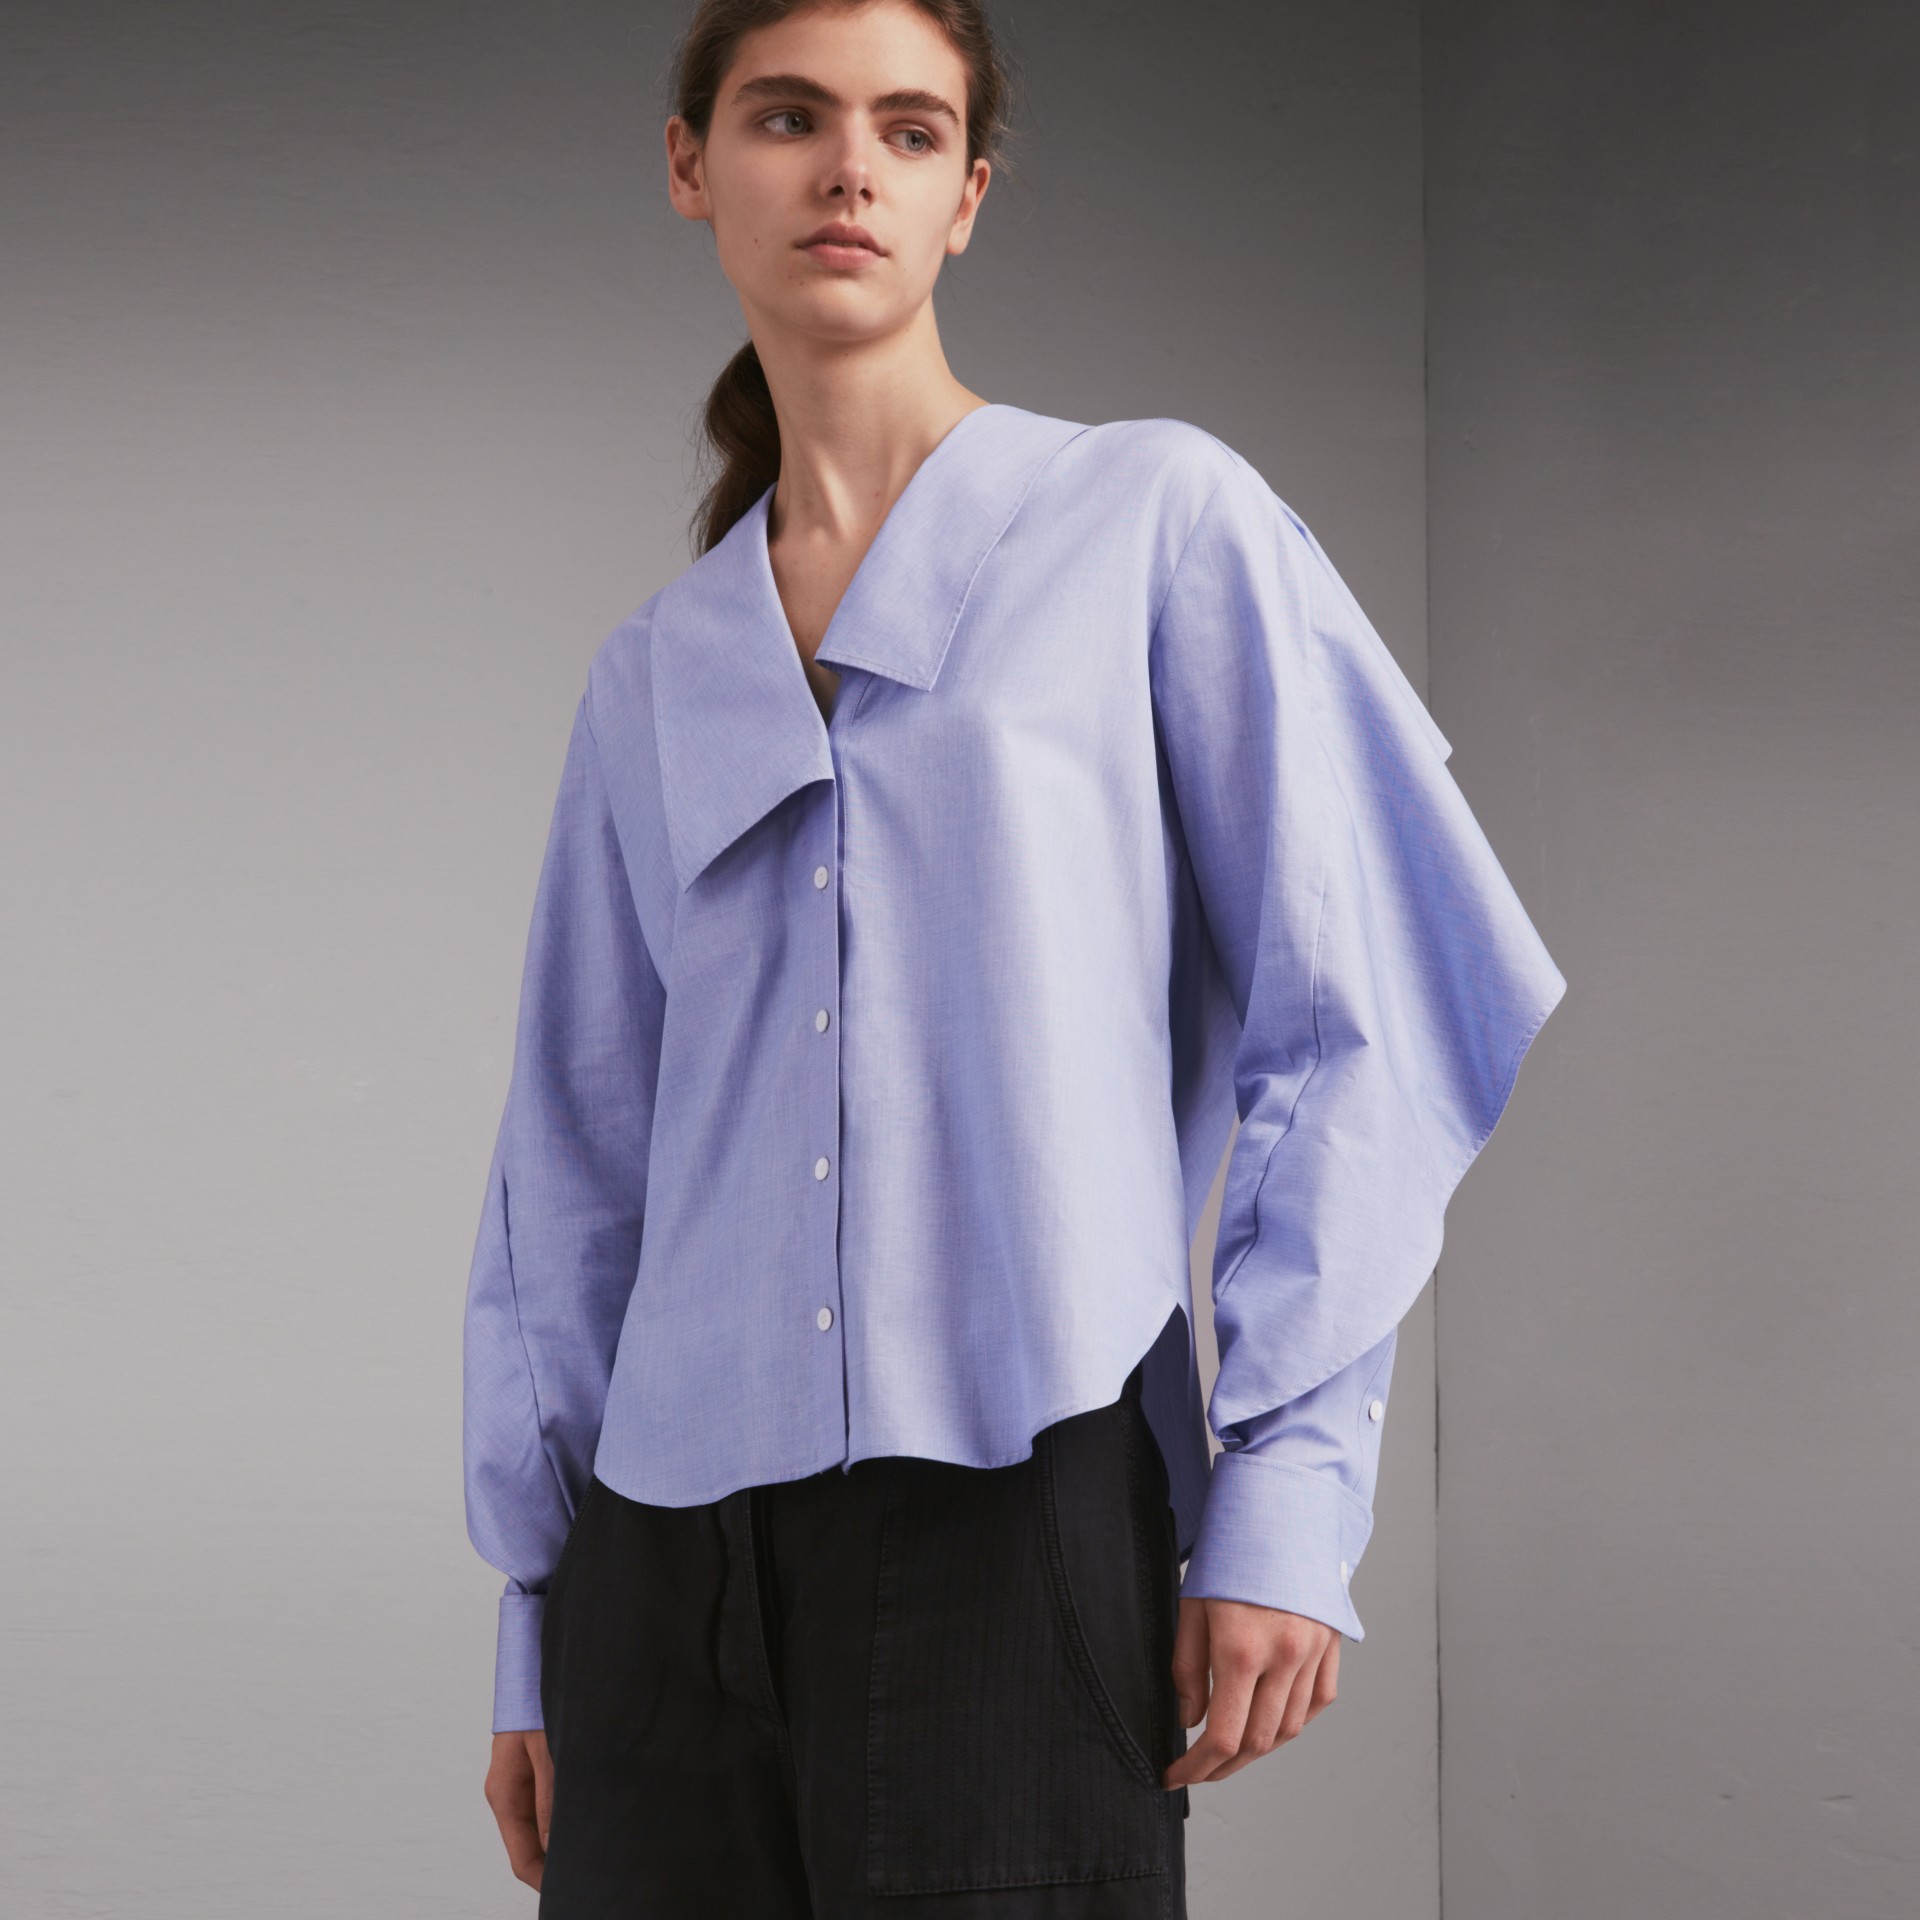 Ruffle Detail Cotton Shirt in Mid Indigo - Women | Burberry United States